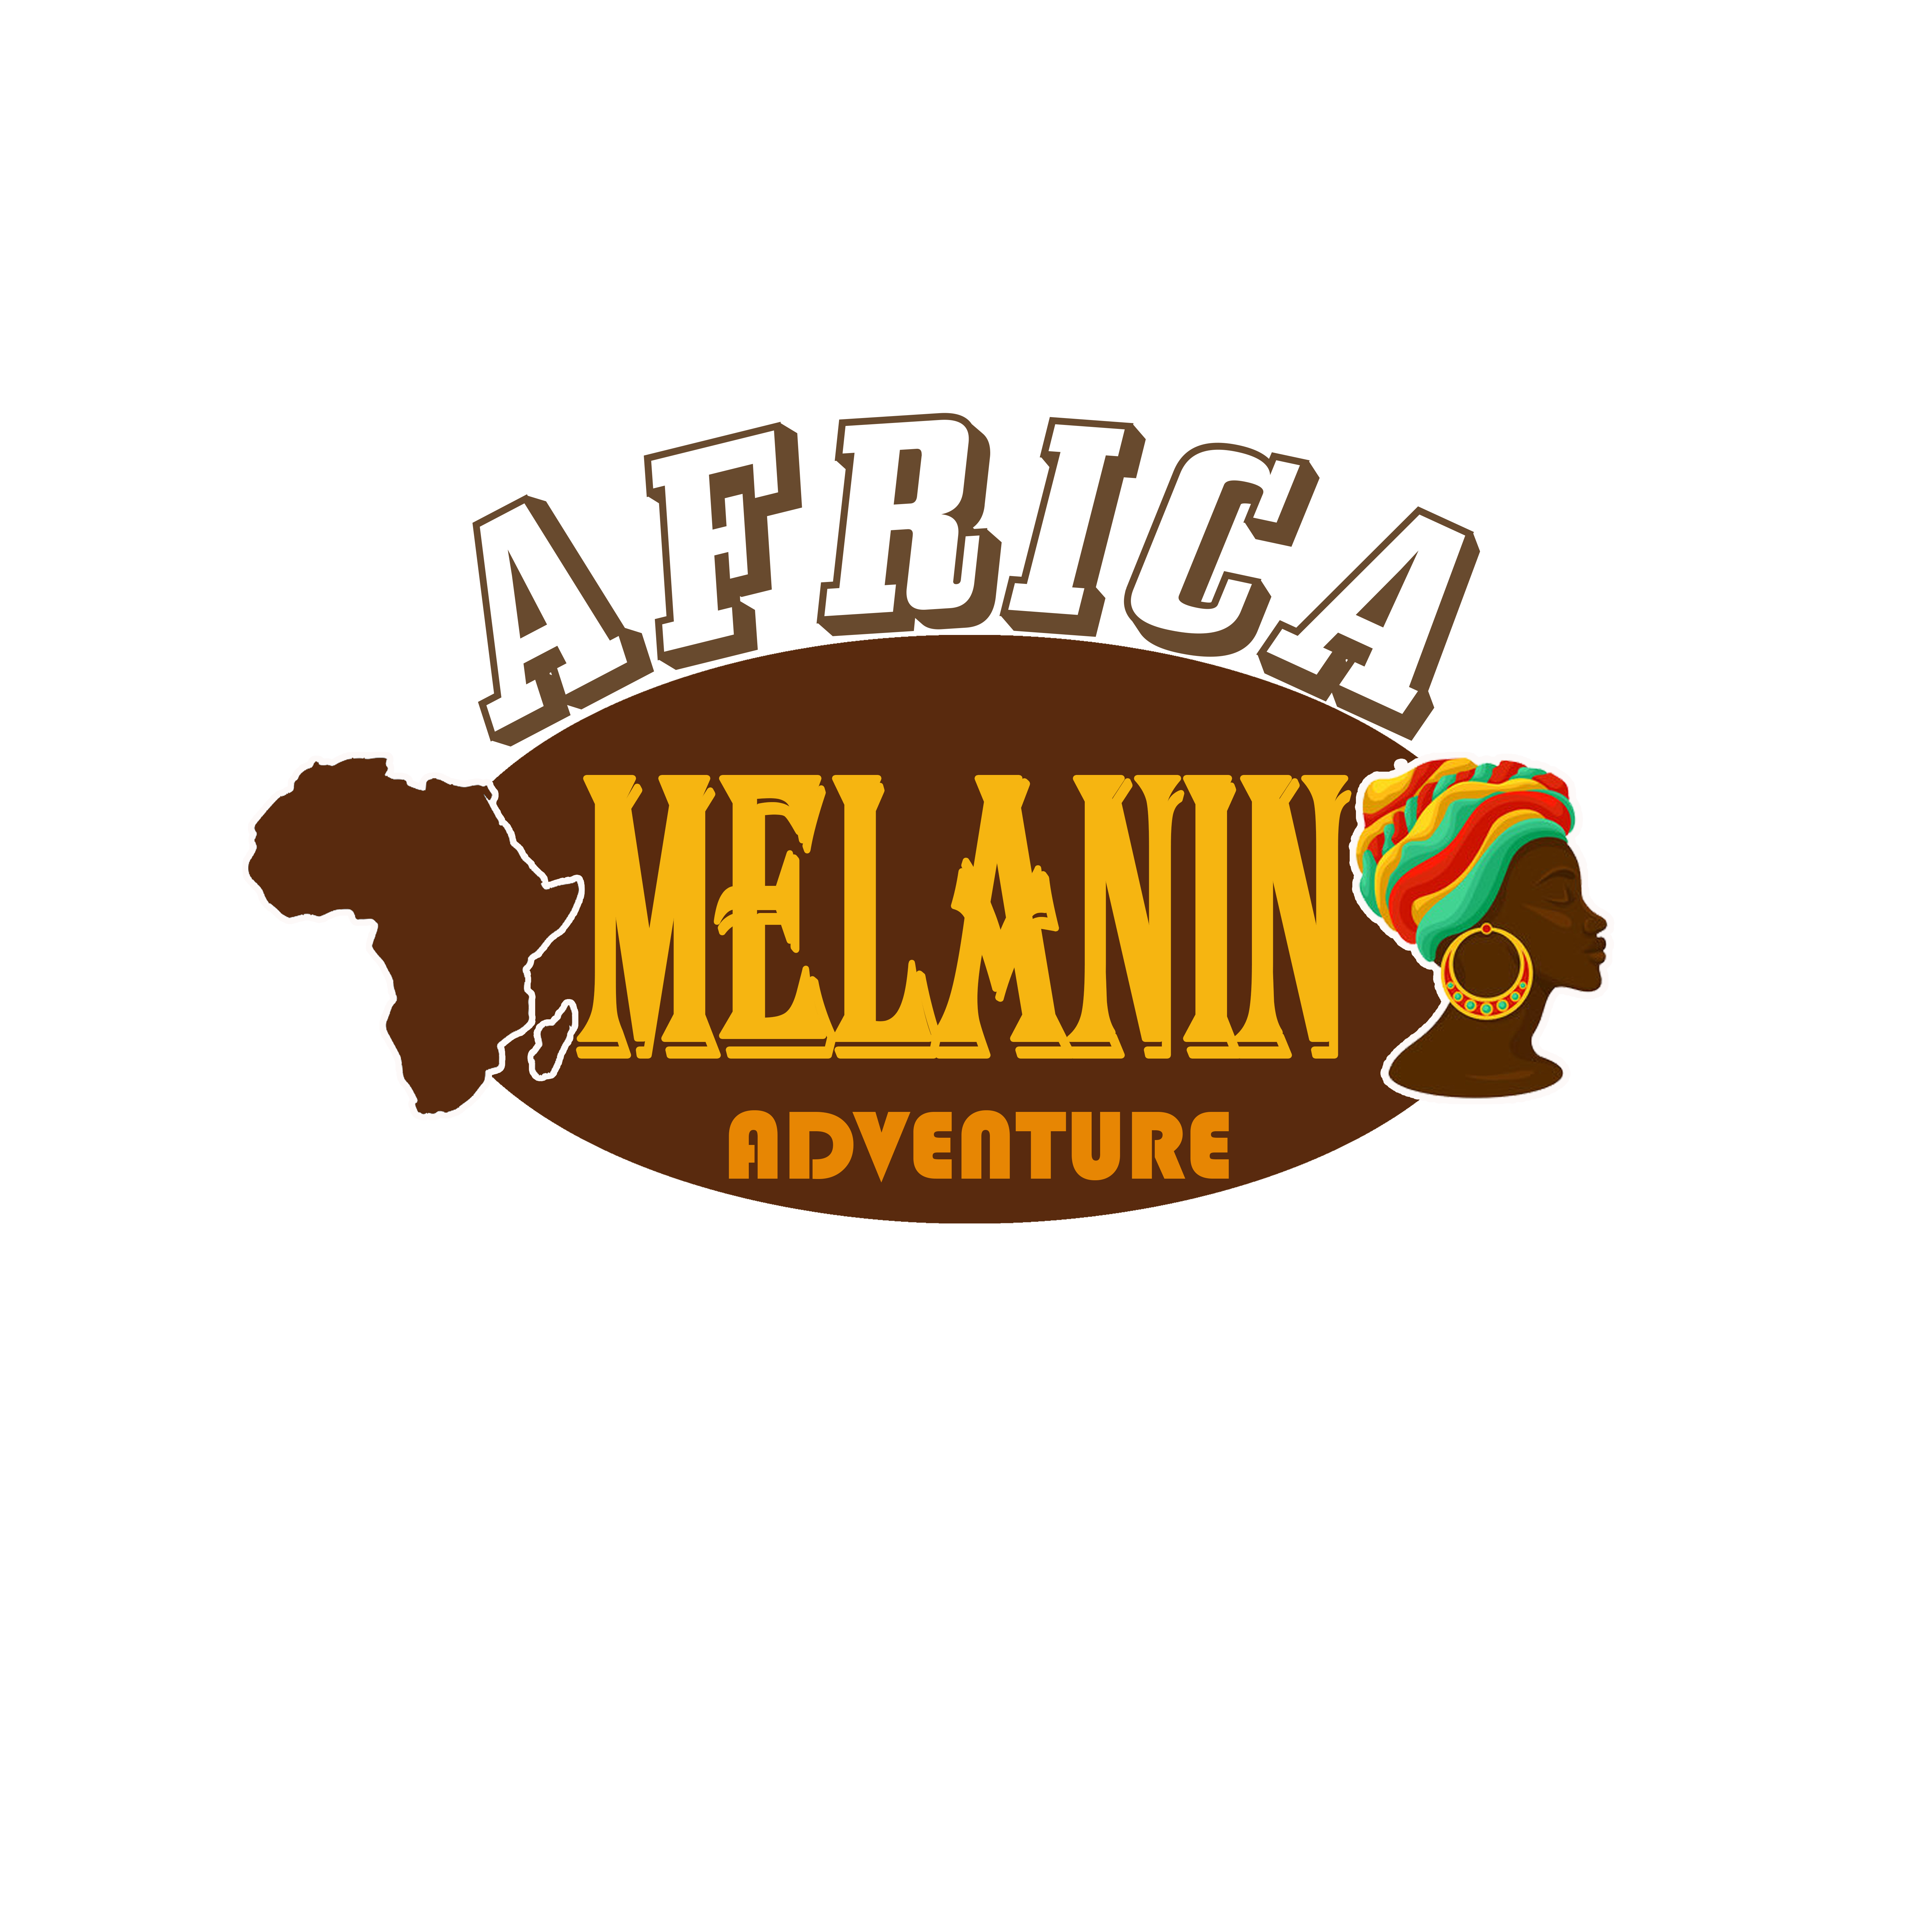 AFRICA MELANIN ADVENTURE -LOGO